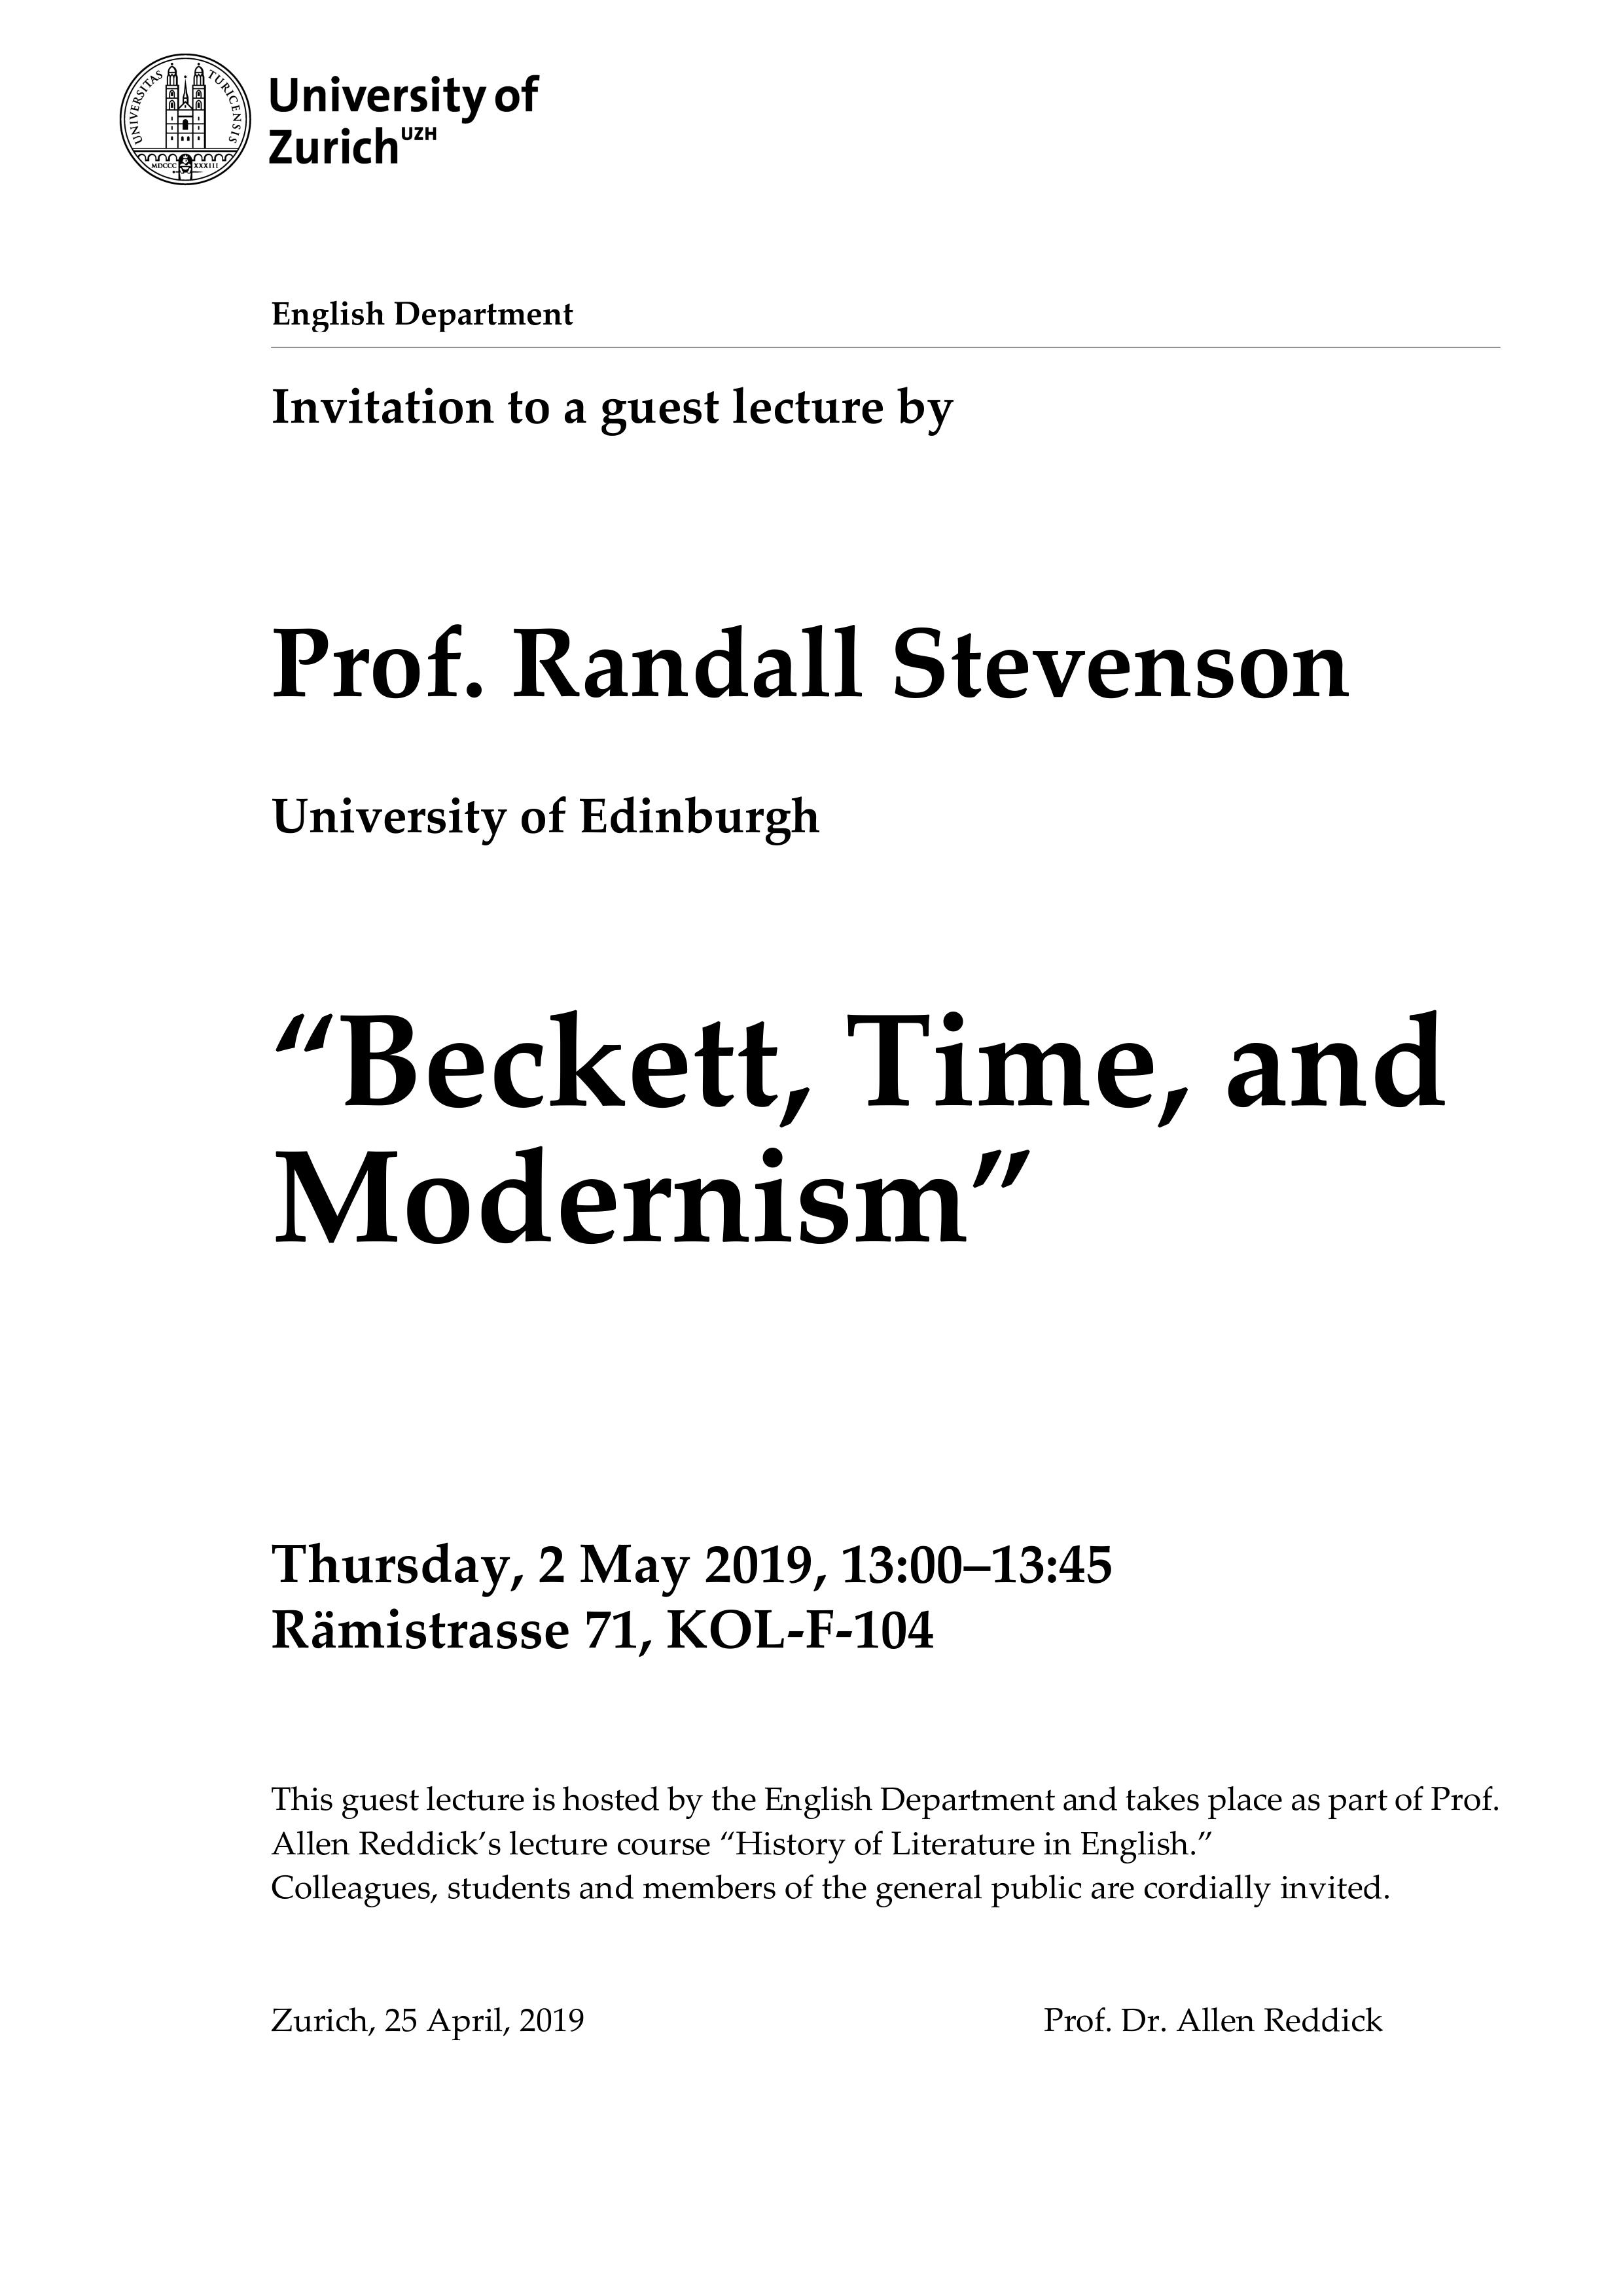 Guest Lecture Prof. Randall Stevenson - University of Edinburgh